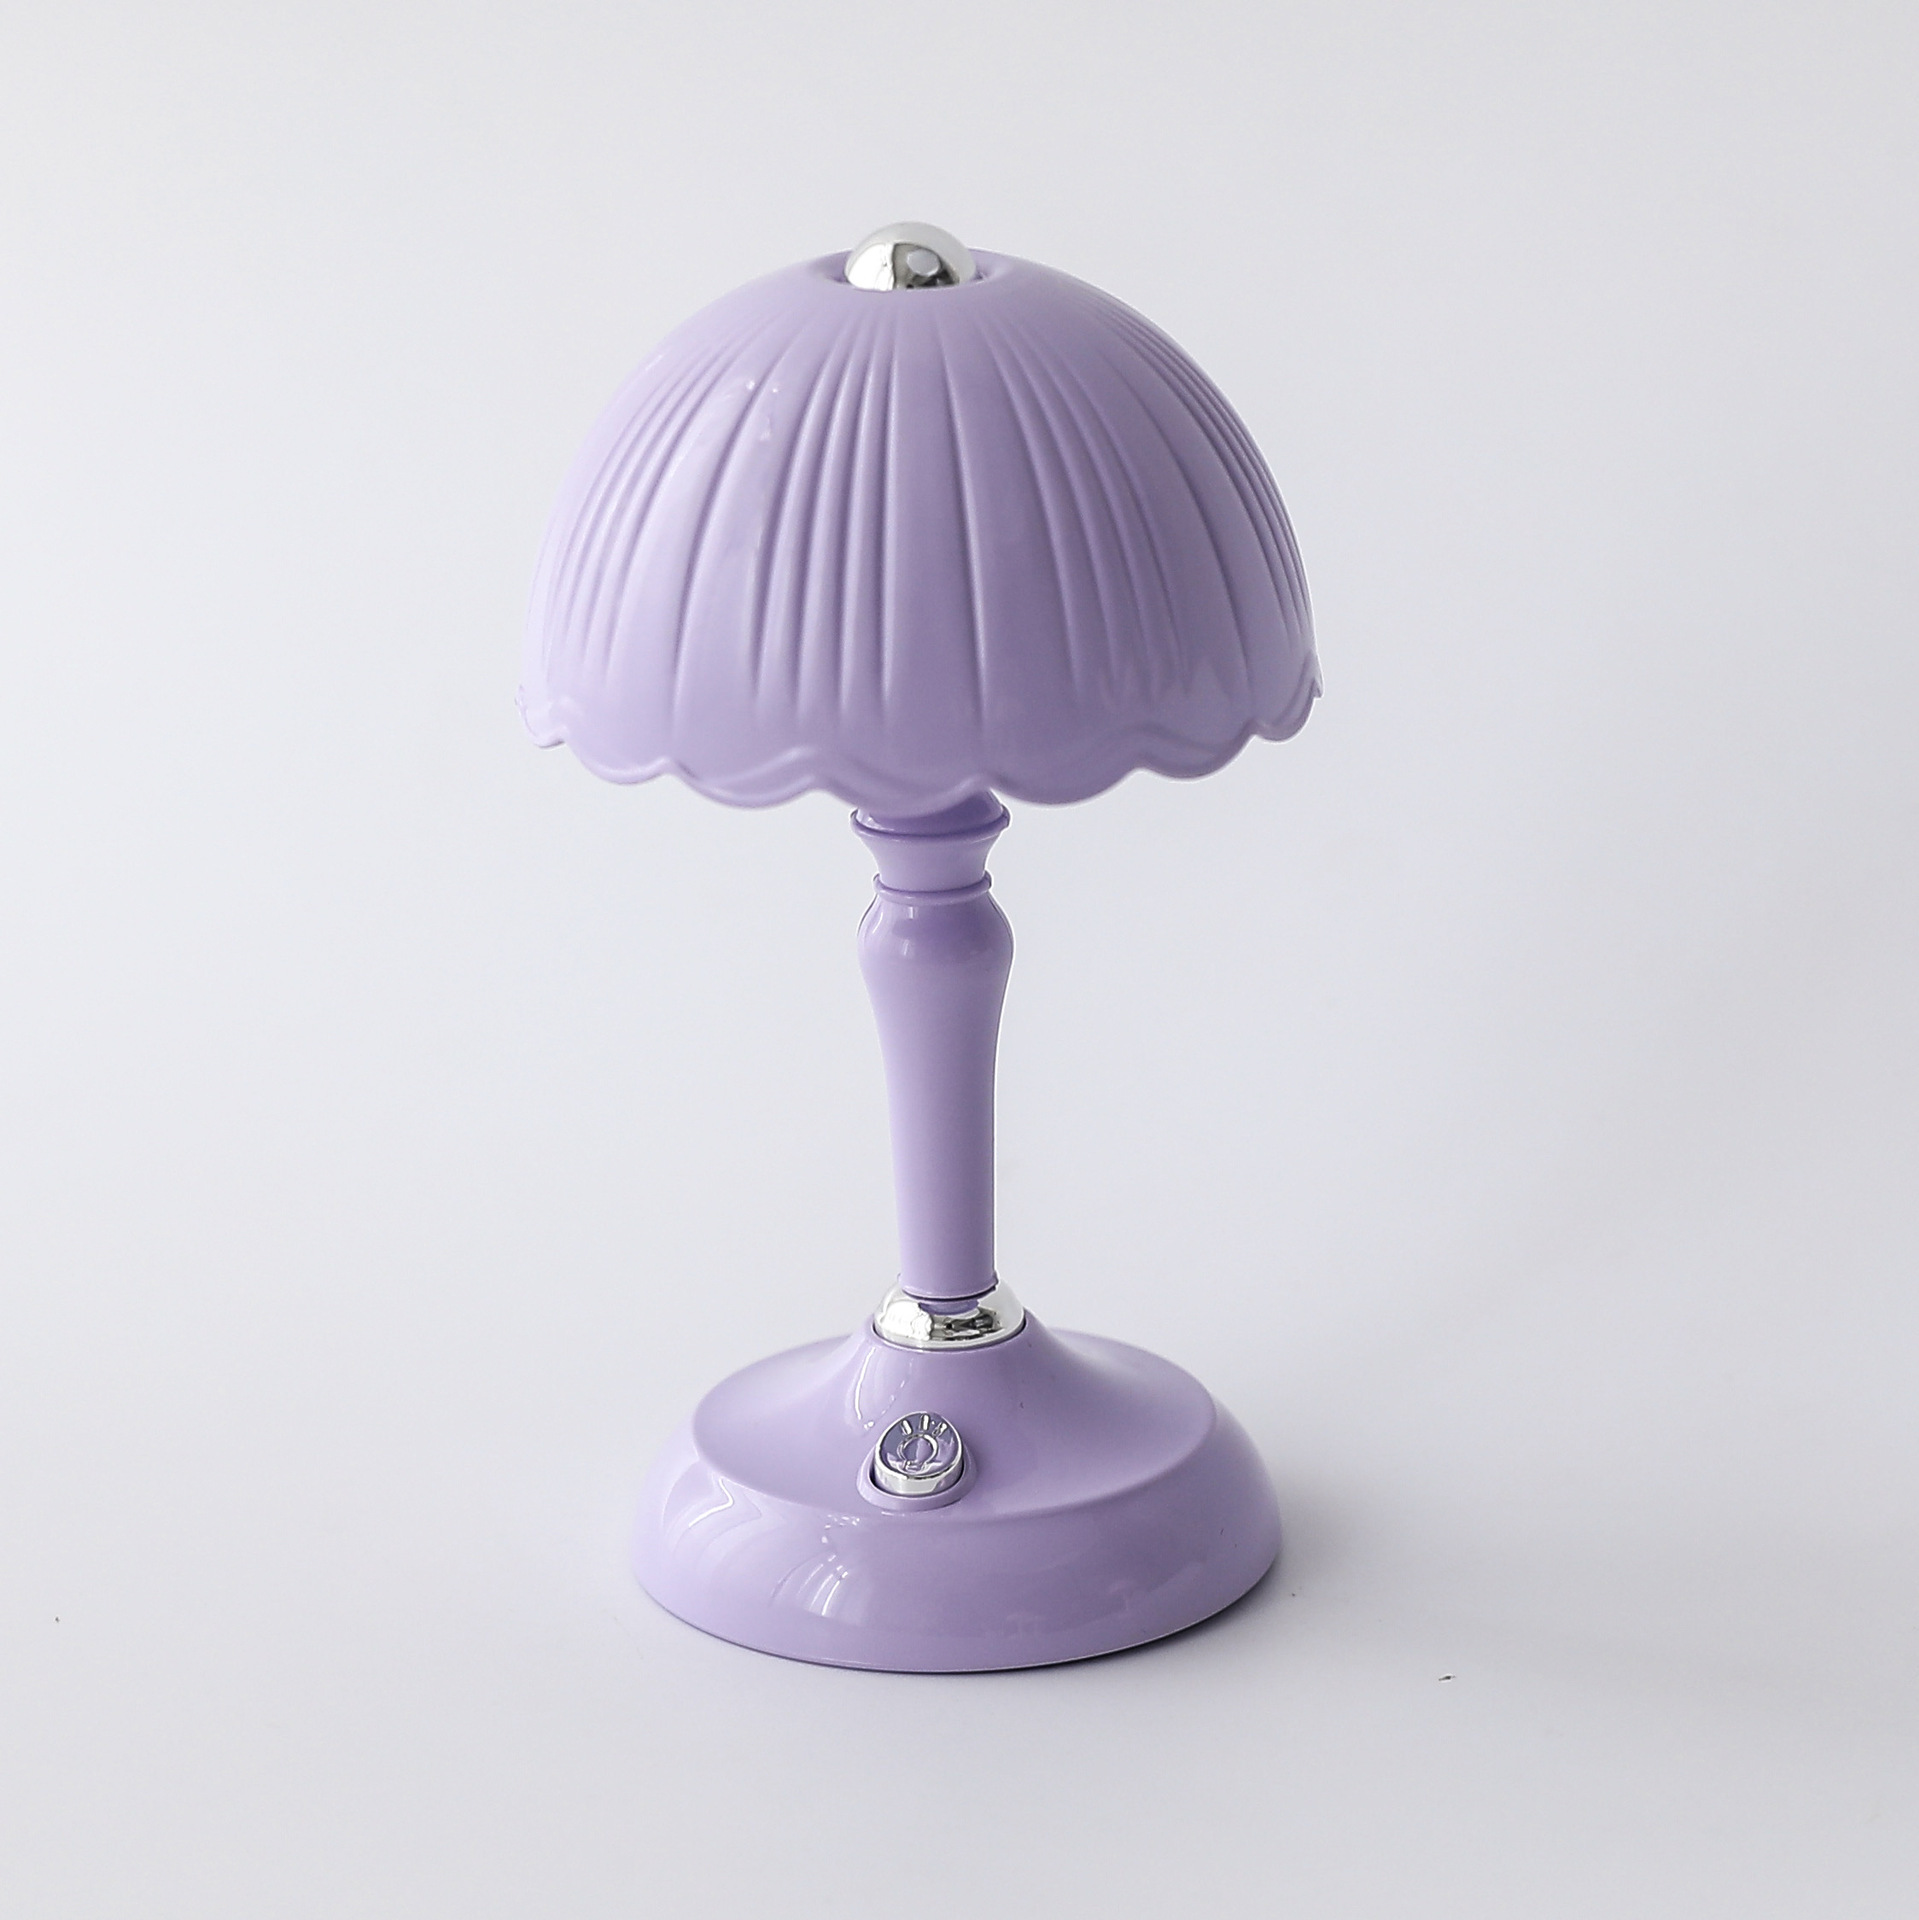 Cross-Border Button Battery Cream Glue Diy Handmade Jellyfish Table Lamp Ins Girl Heart Romantic Bedroom Small Night Lamp Gift